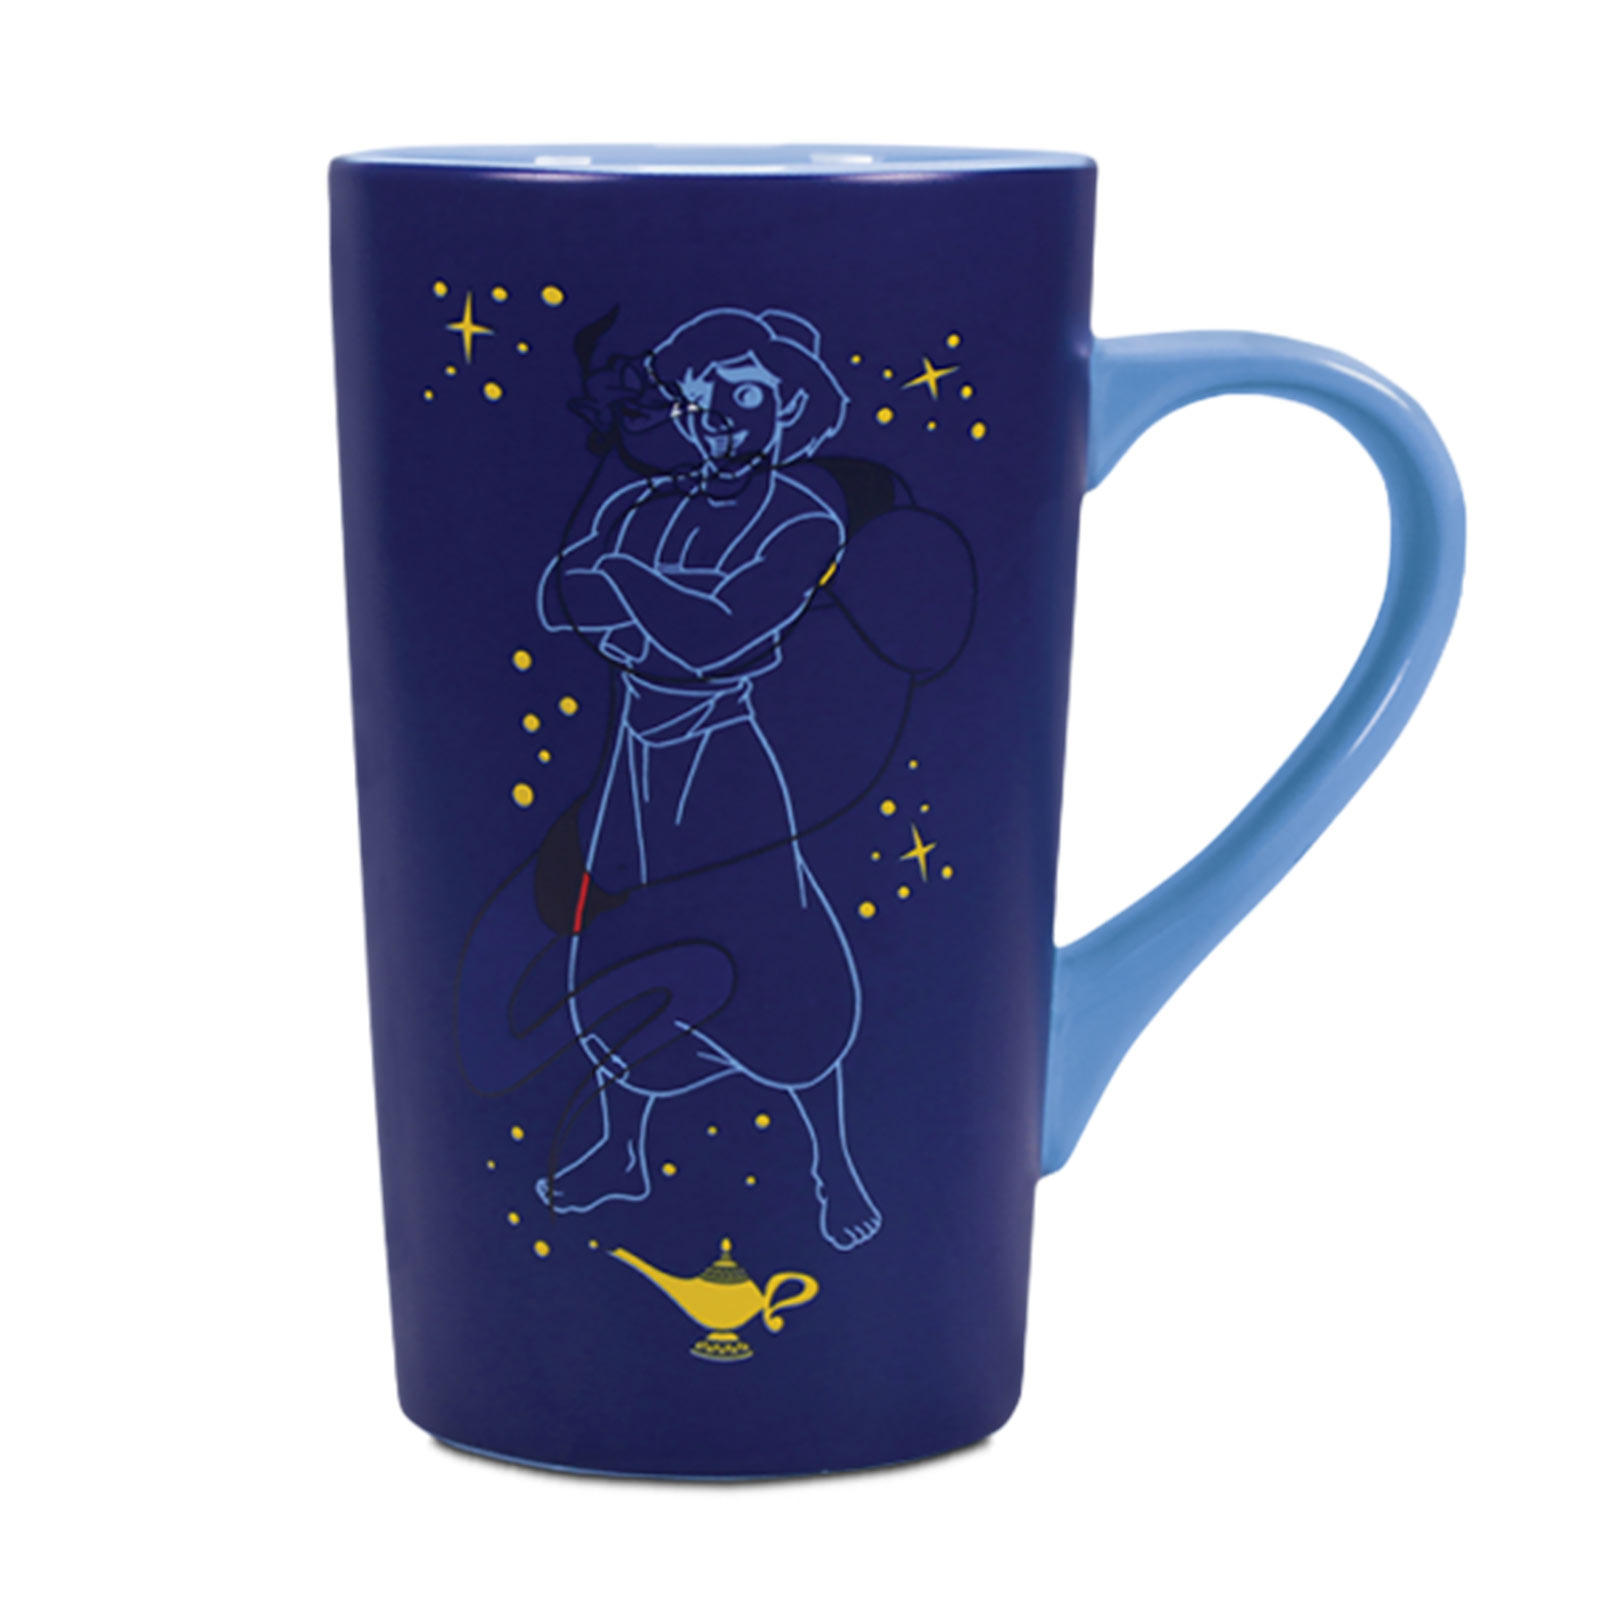 Aladdin and Genie Thermoeffect Mug